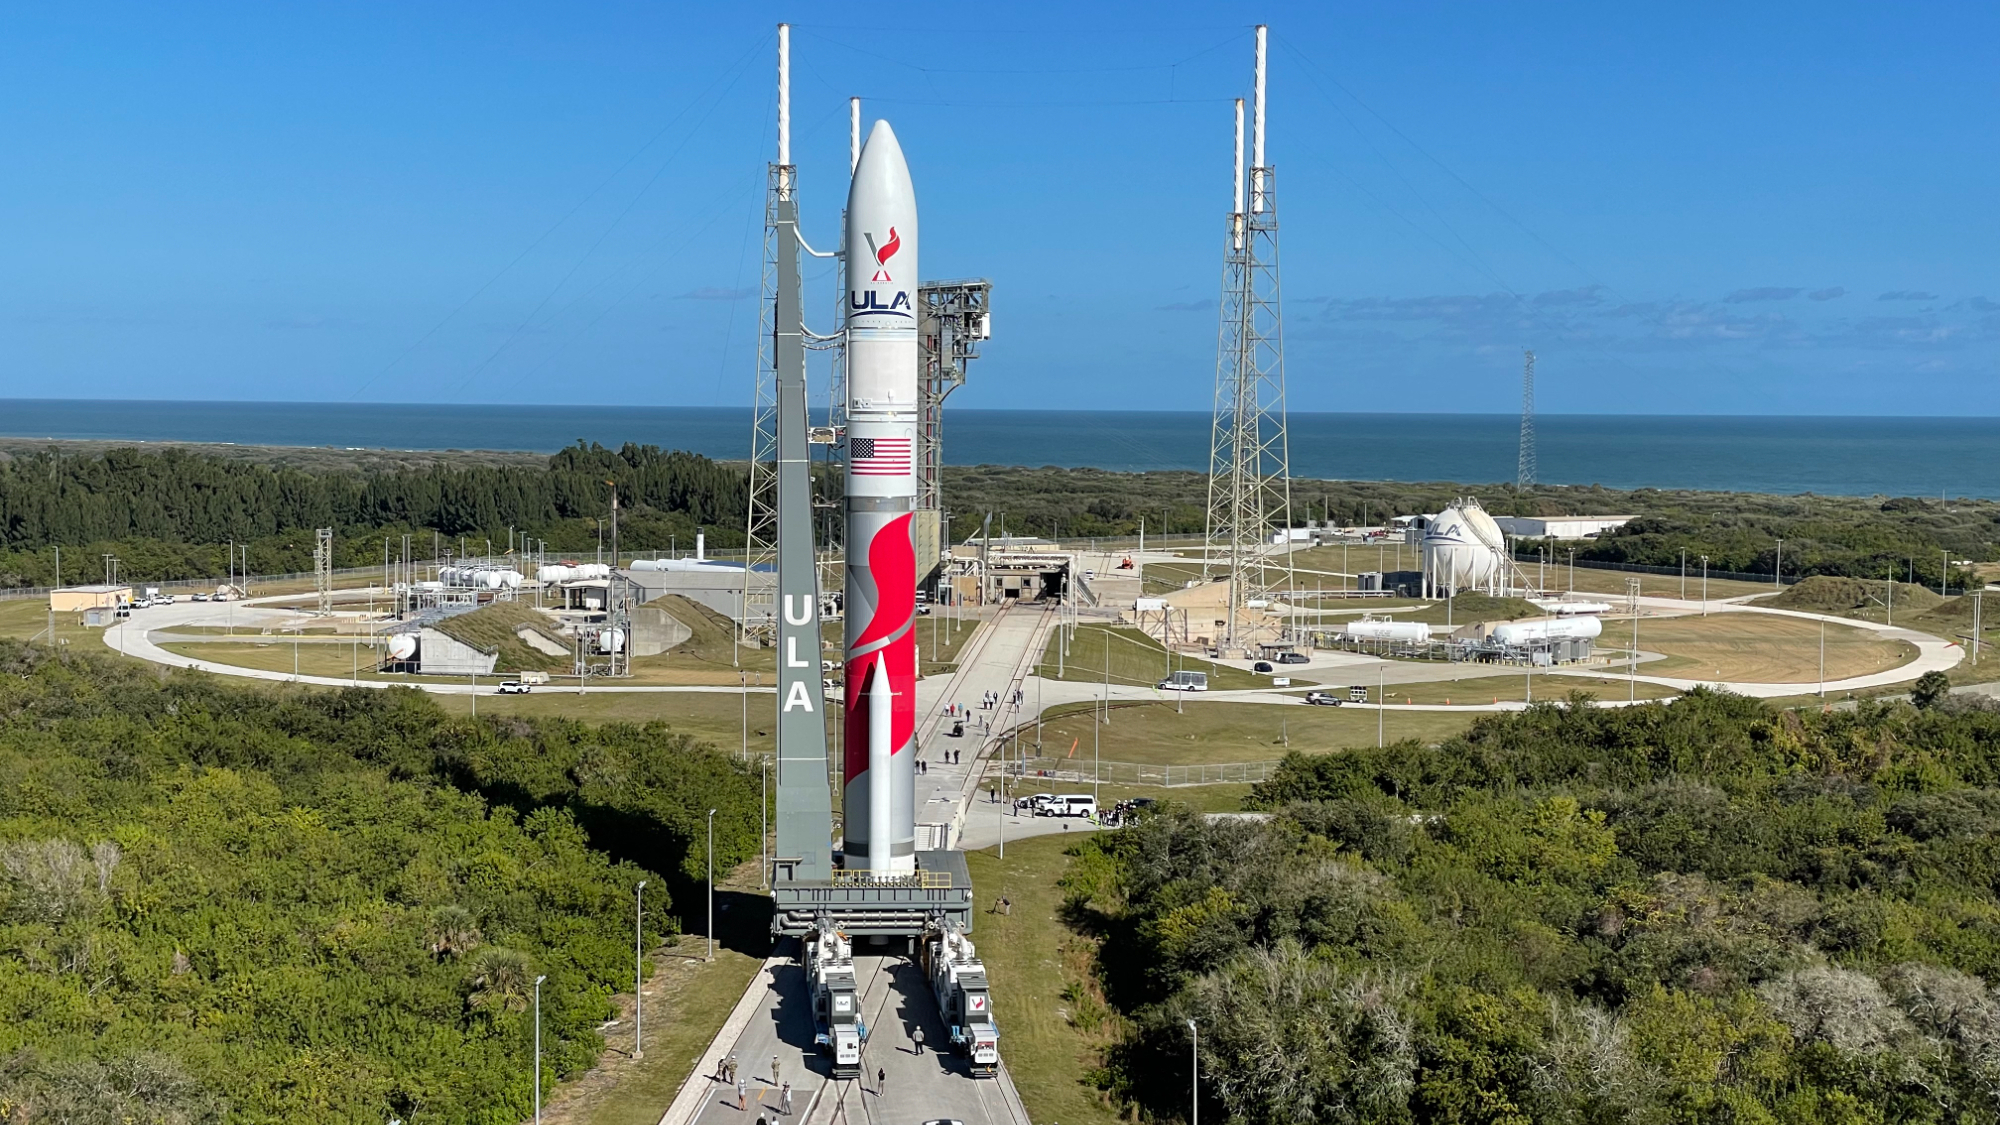 Roket merah putih berdiri di landasan peluncuran dengan latar belakang laut.